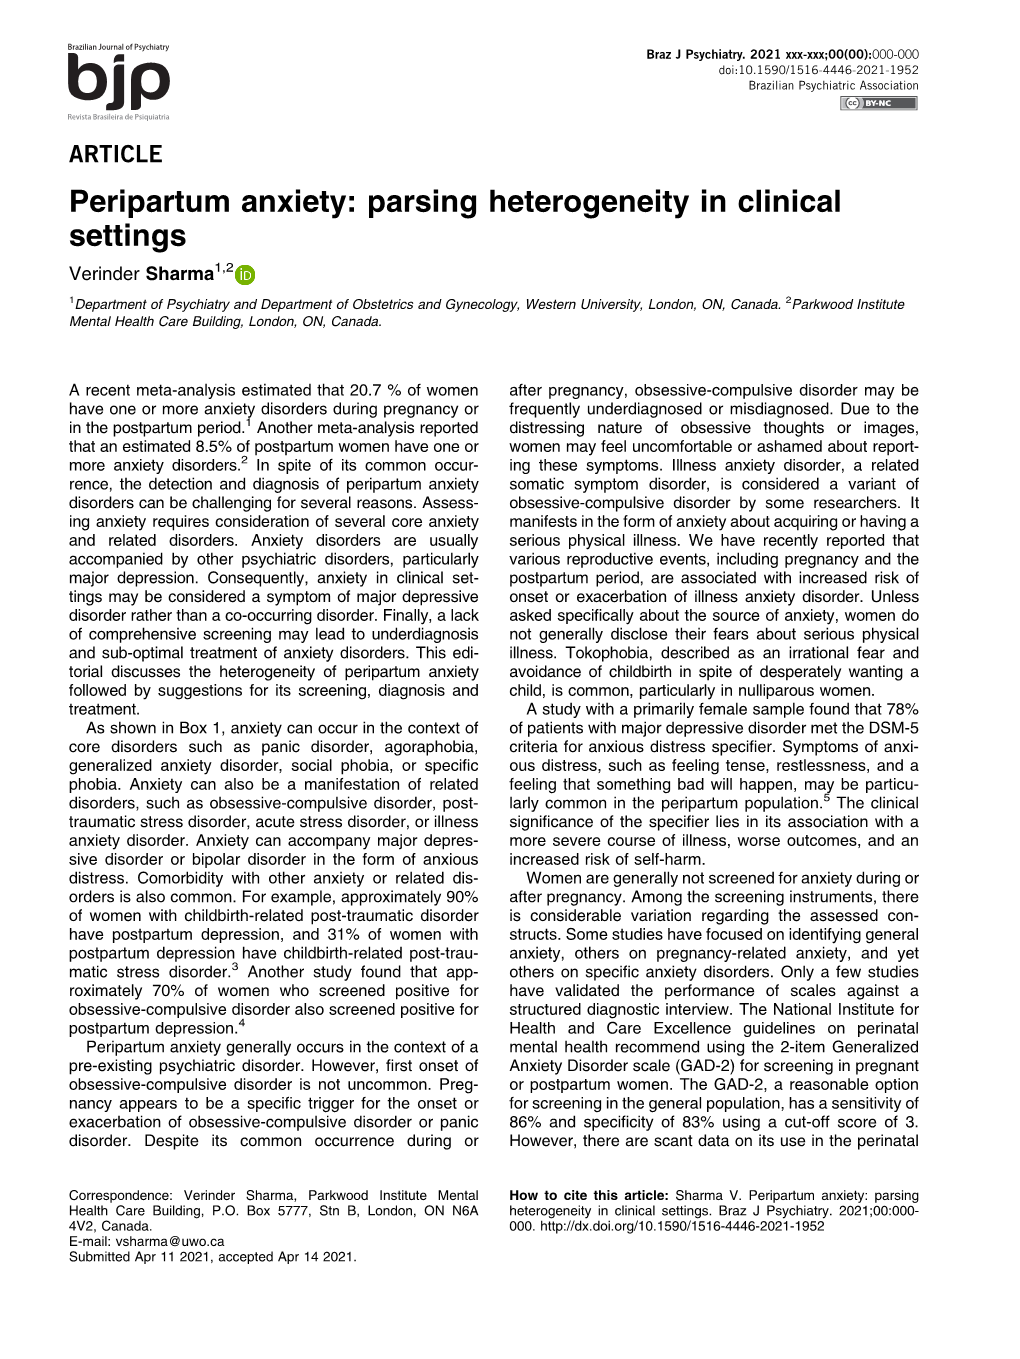 Peripartum Anxiety: Parsing Heterogeneity in Clinical Settings Verinder Sharma1,20000-0000-0000-0000